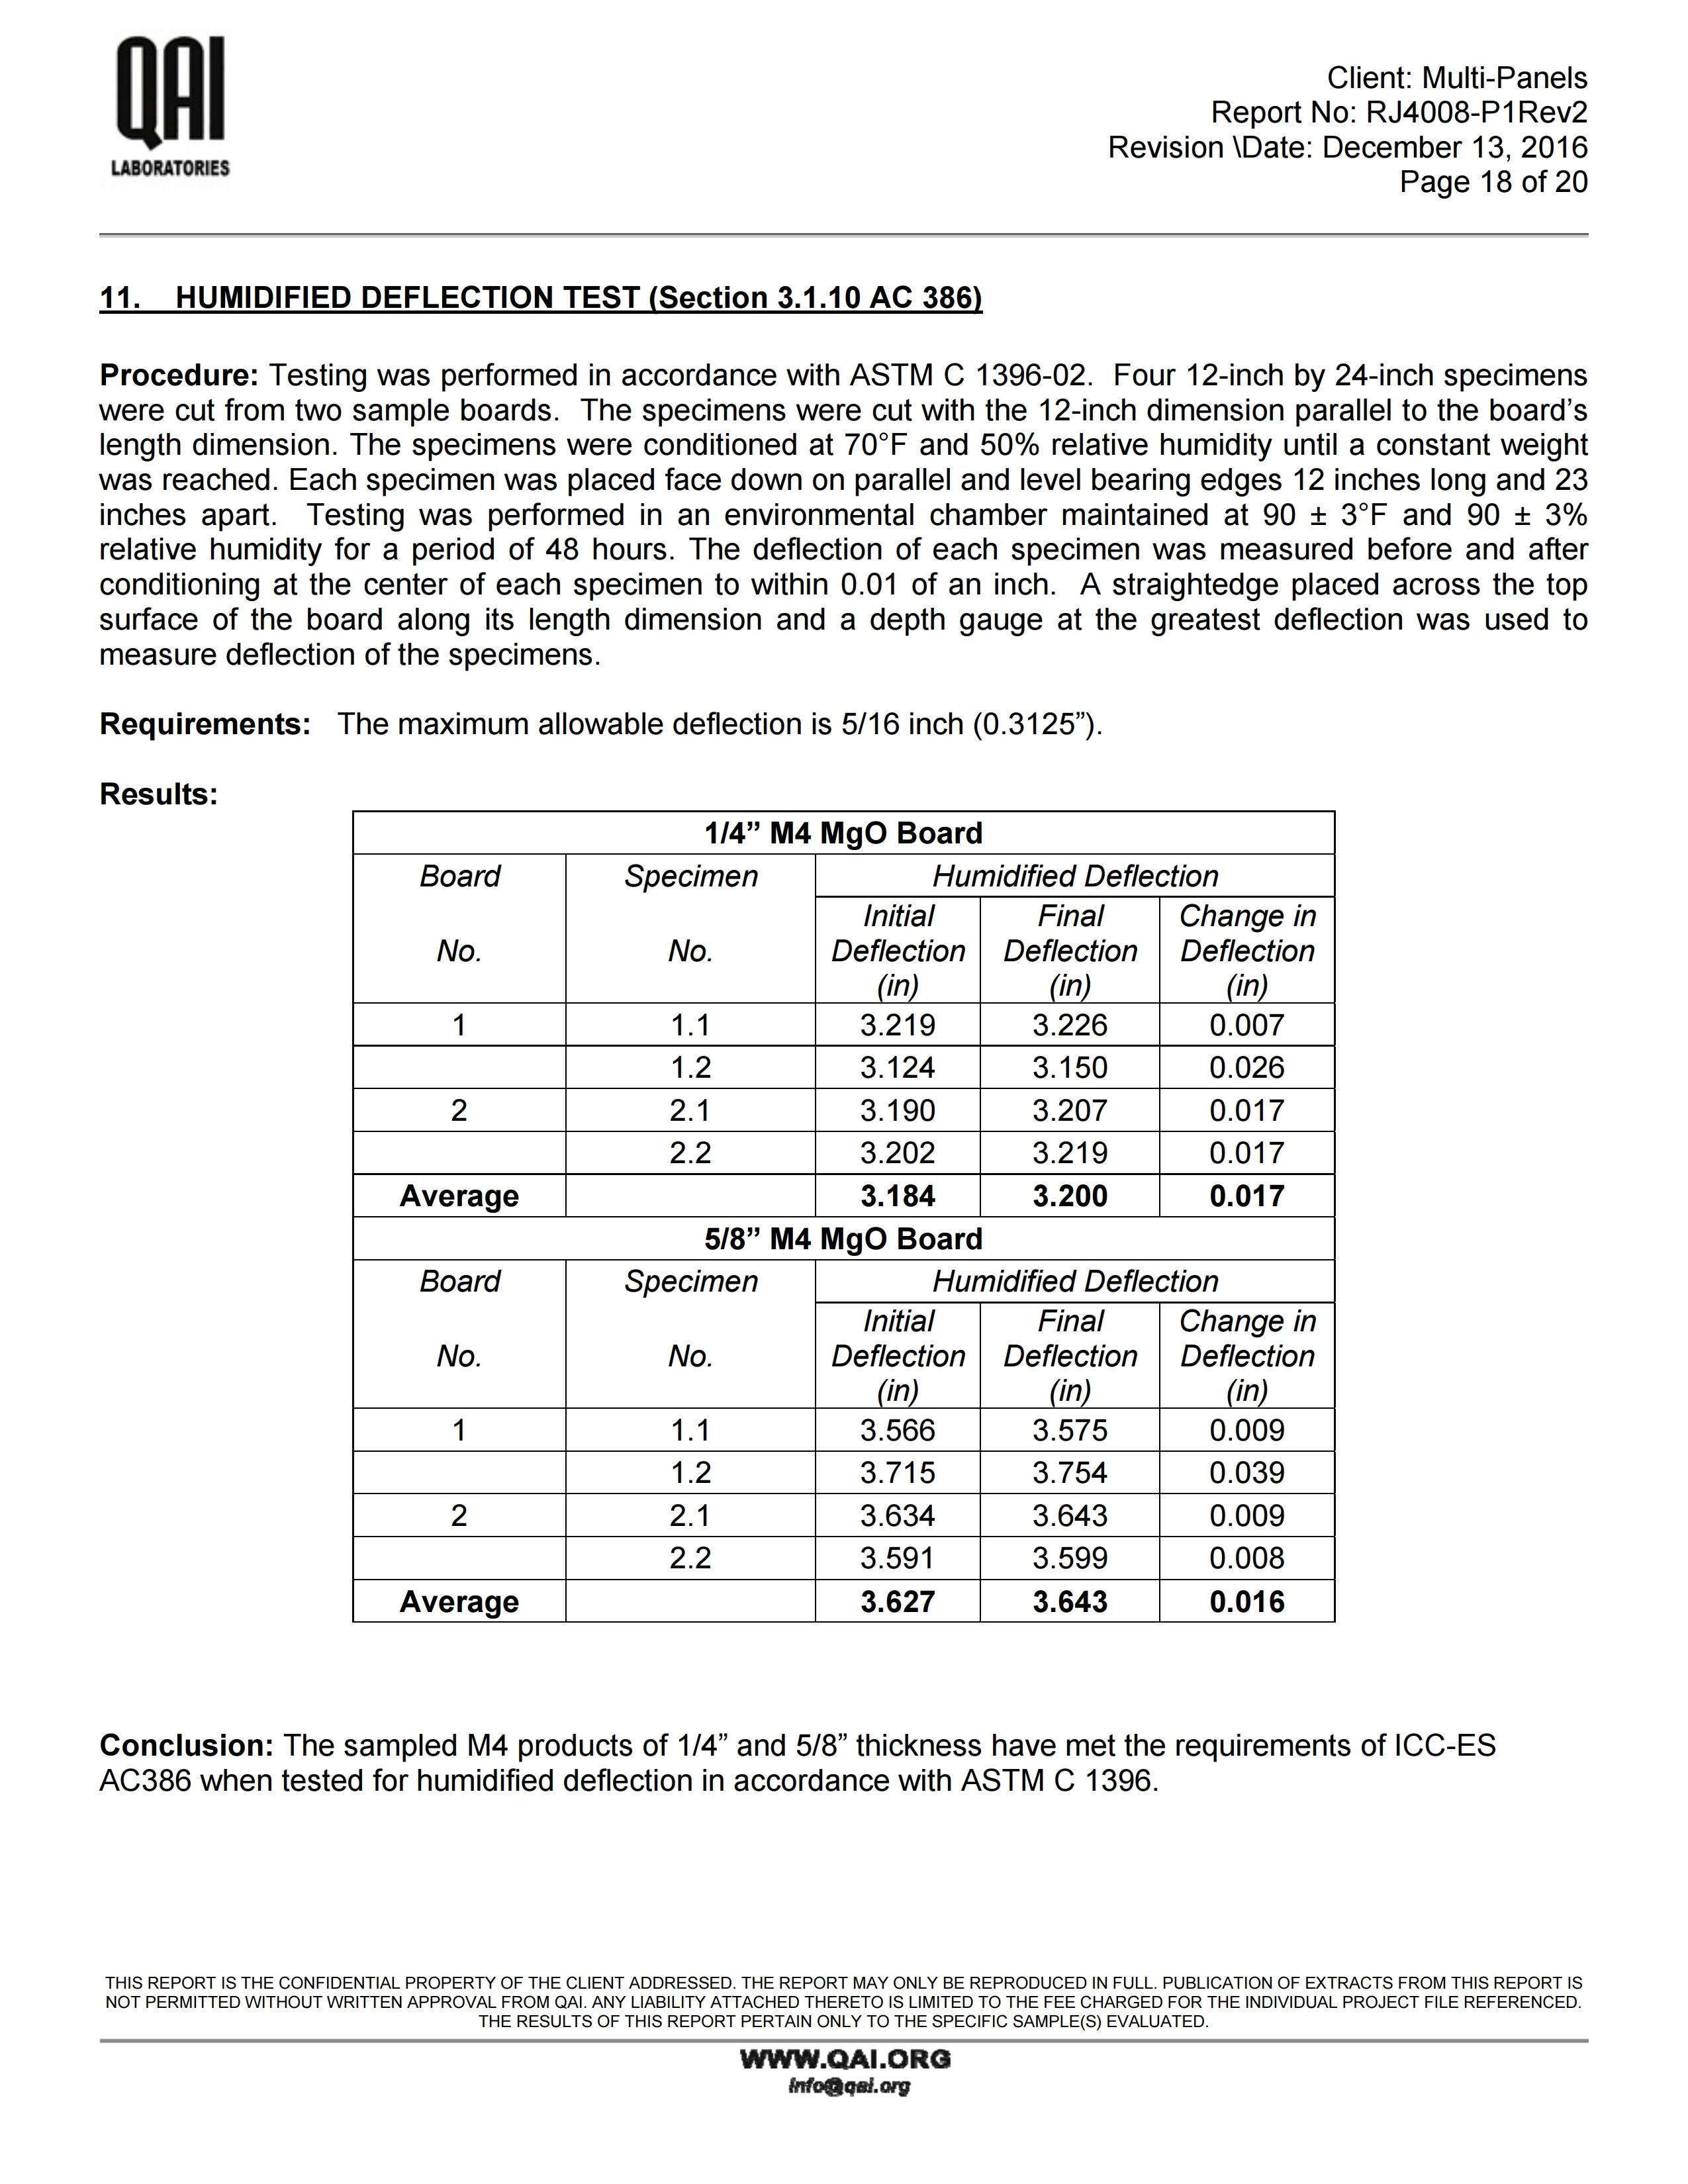 RJ4008-P1REV2-Multi-Panels-M4-AC386 Report-13122016 (2).pdf_page_18.jpg